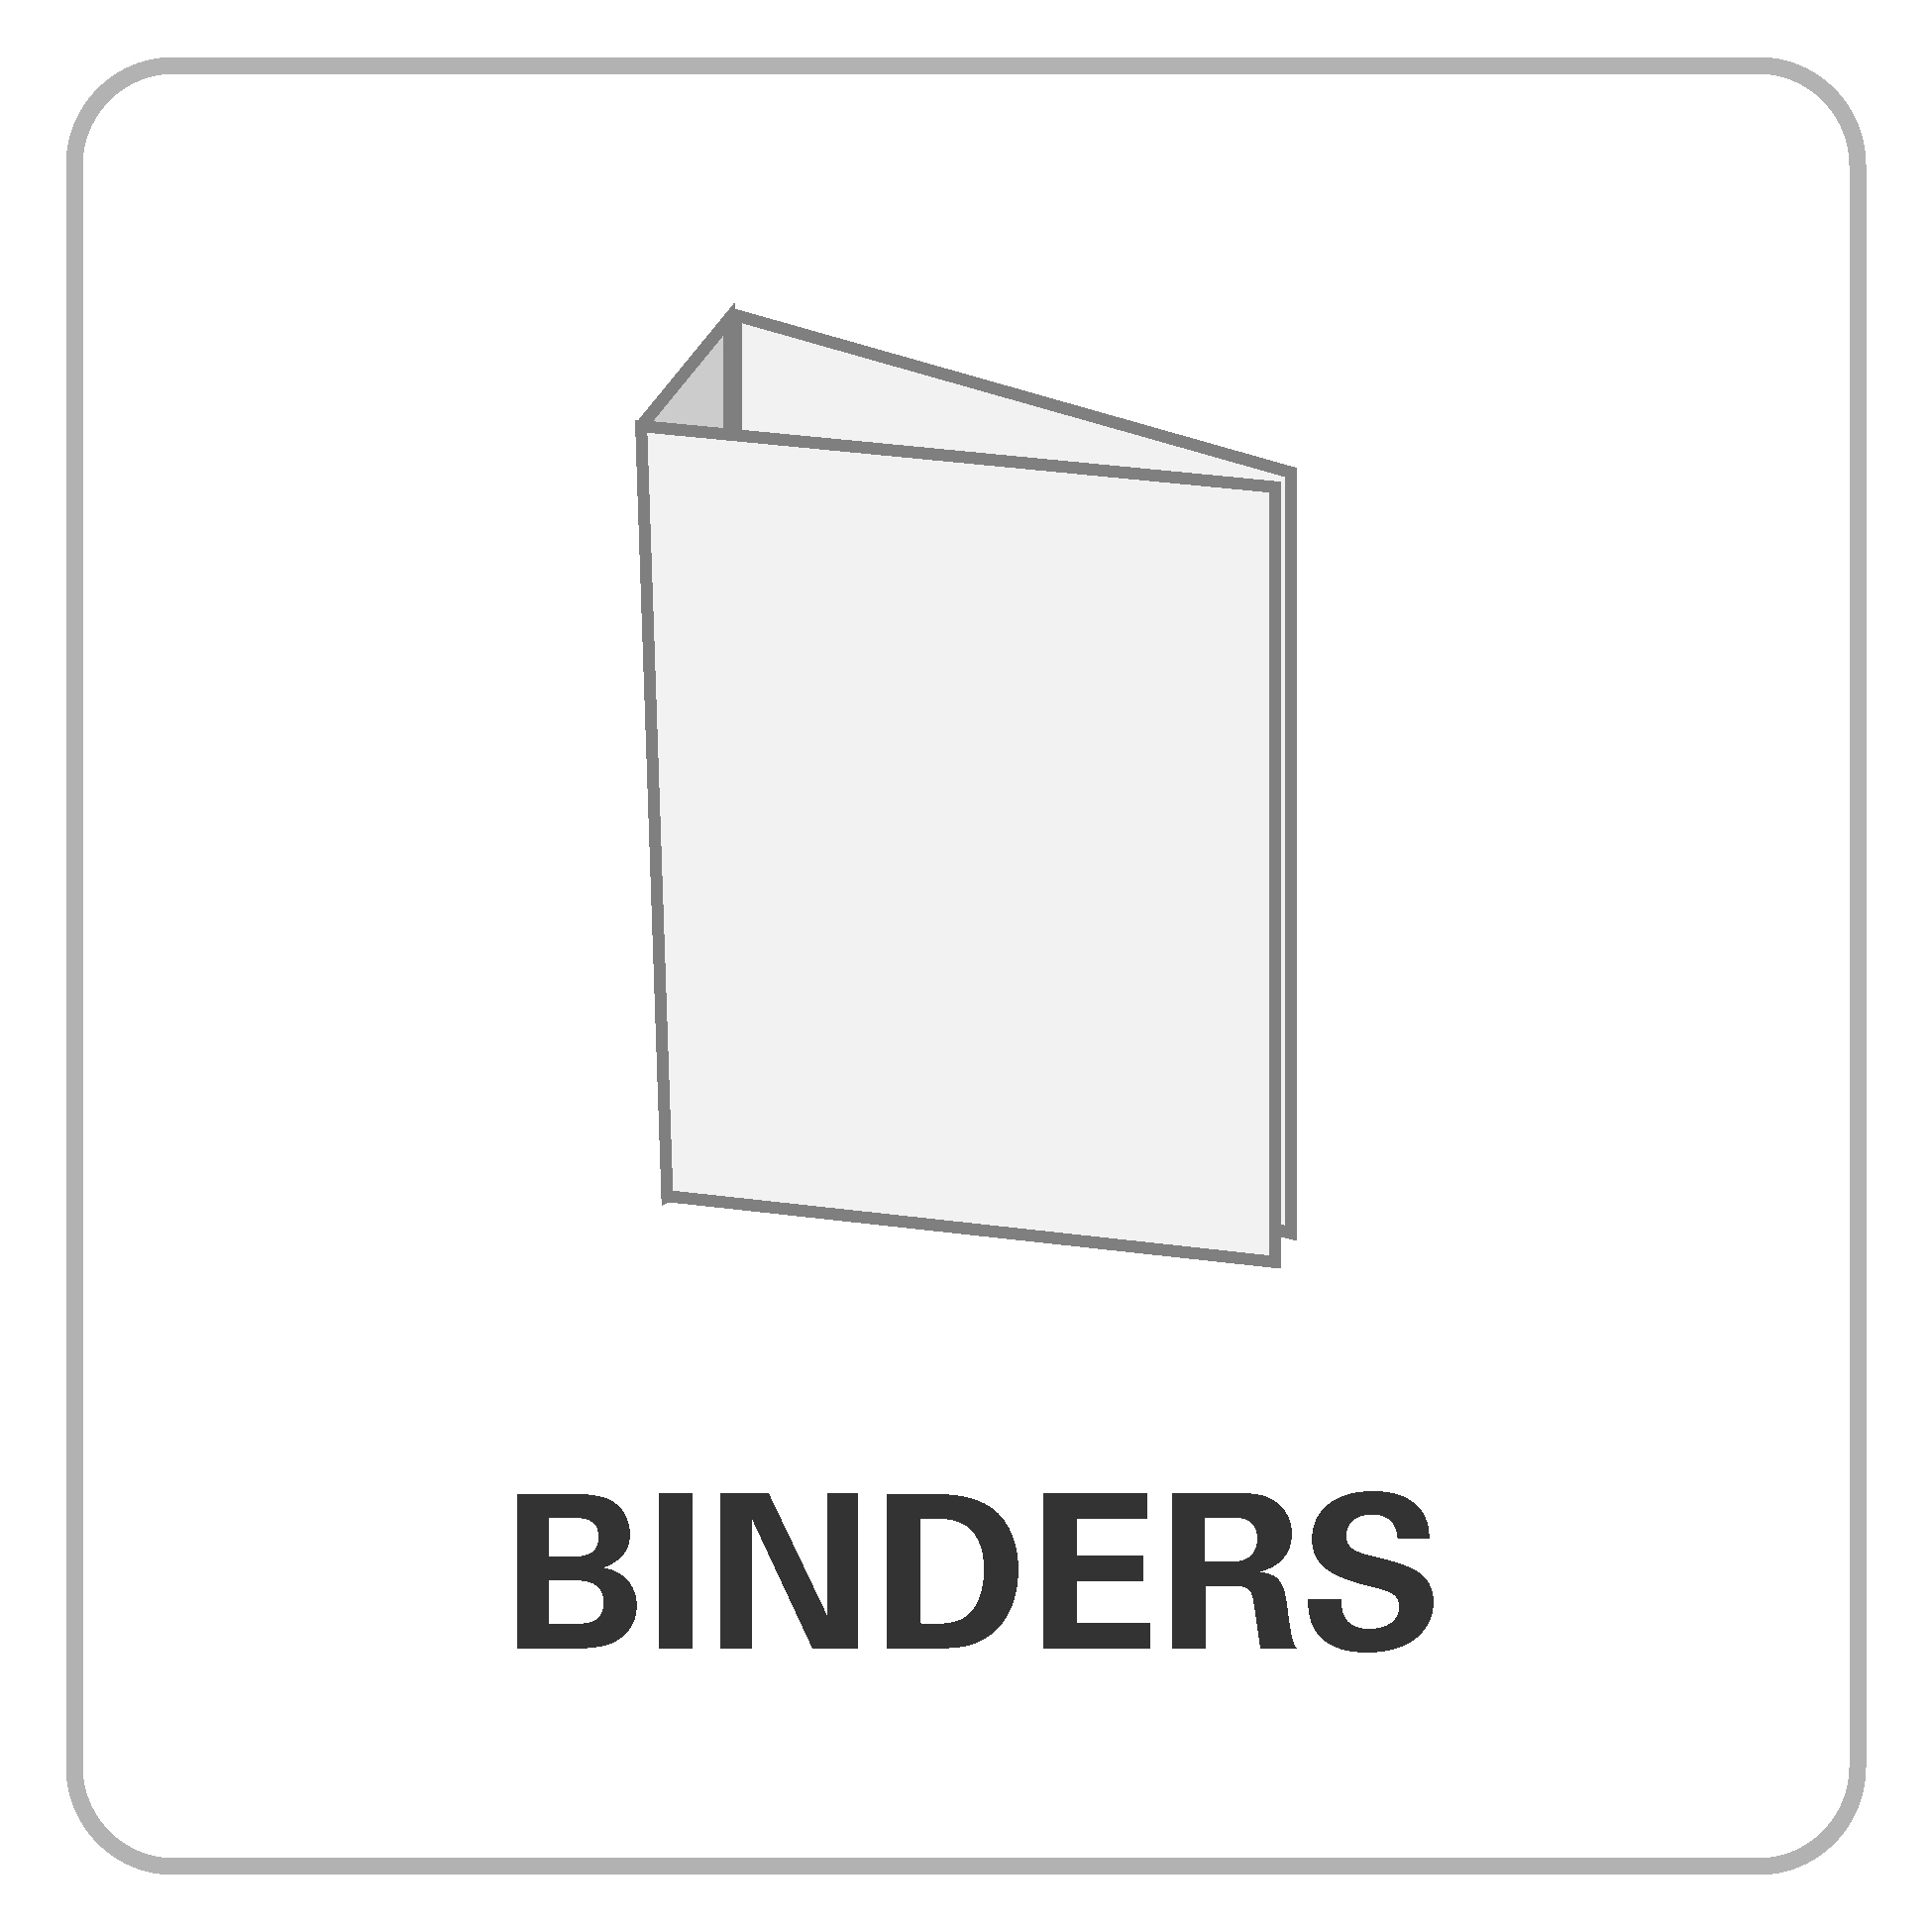 bindery, wholesale printer, binder, mylar tabs, printing, print finishing options